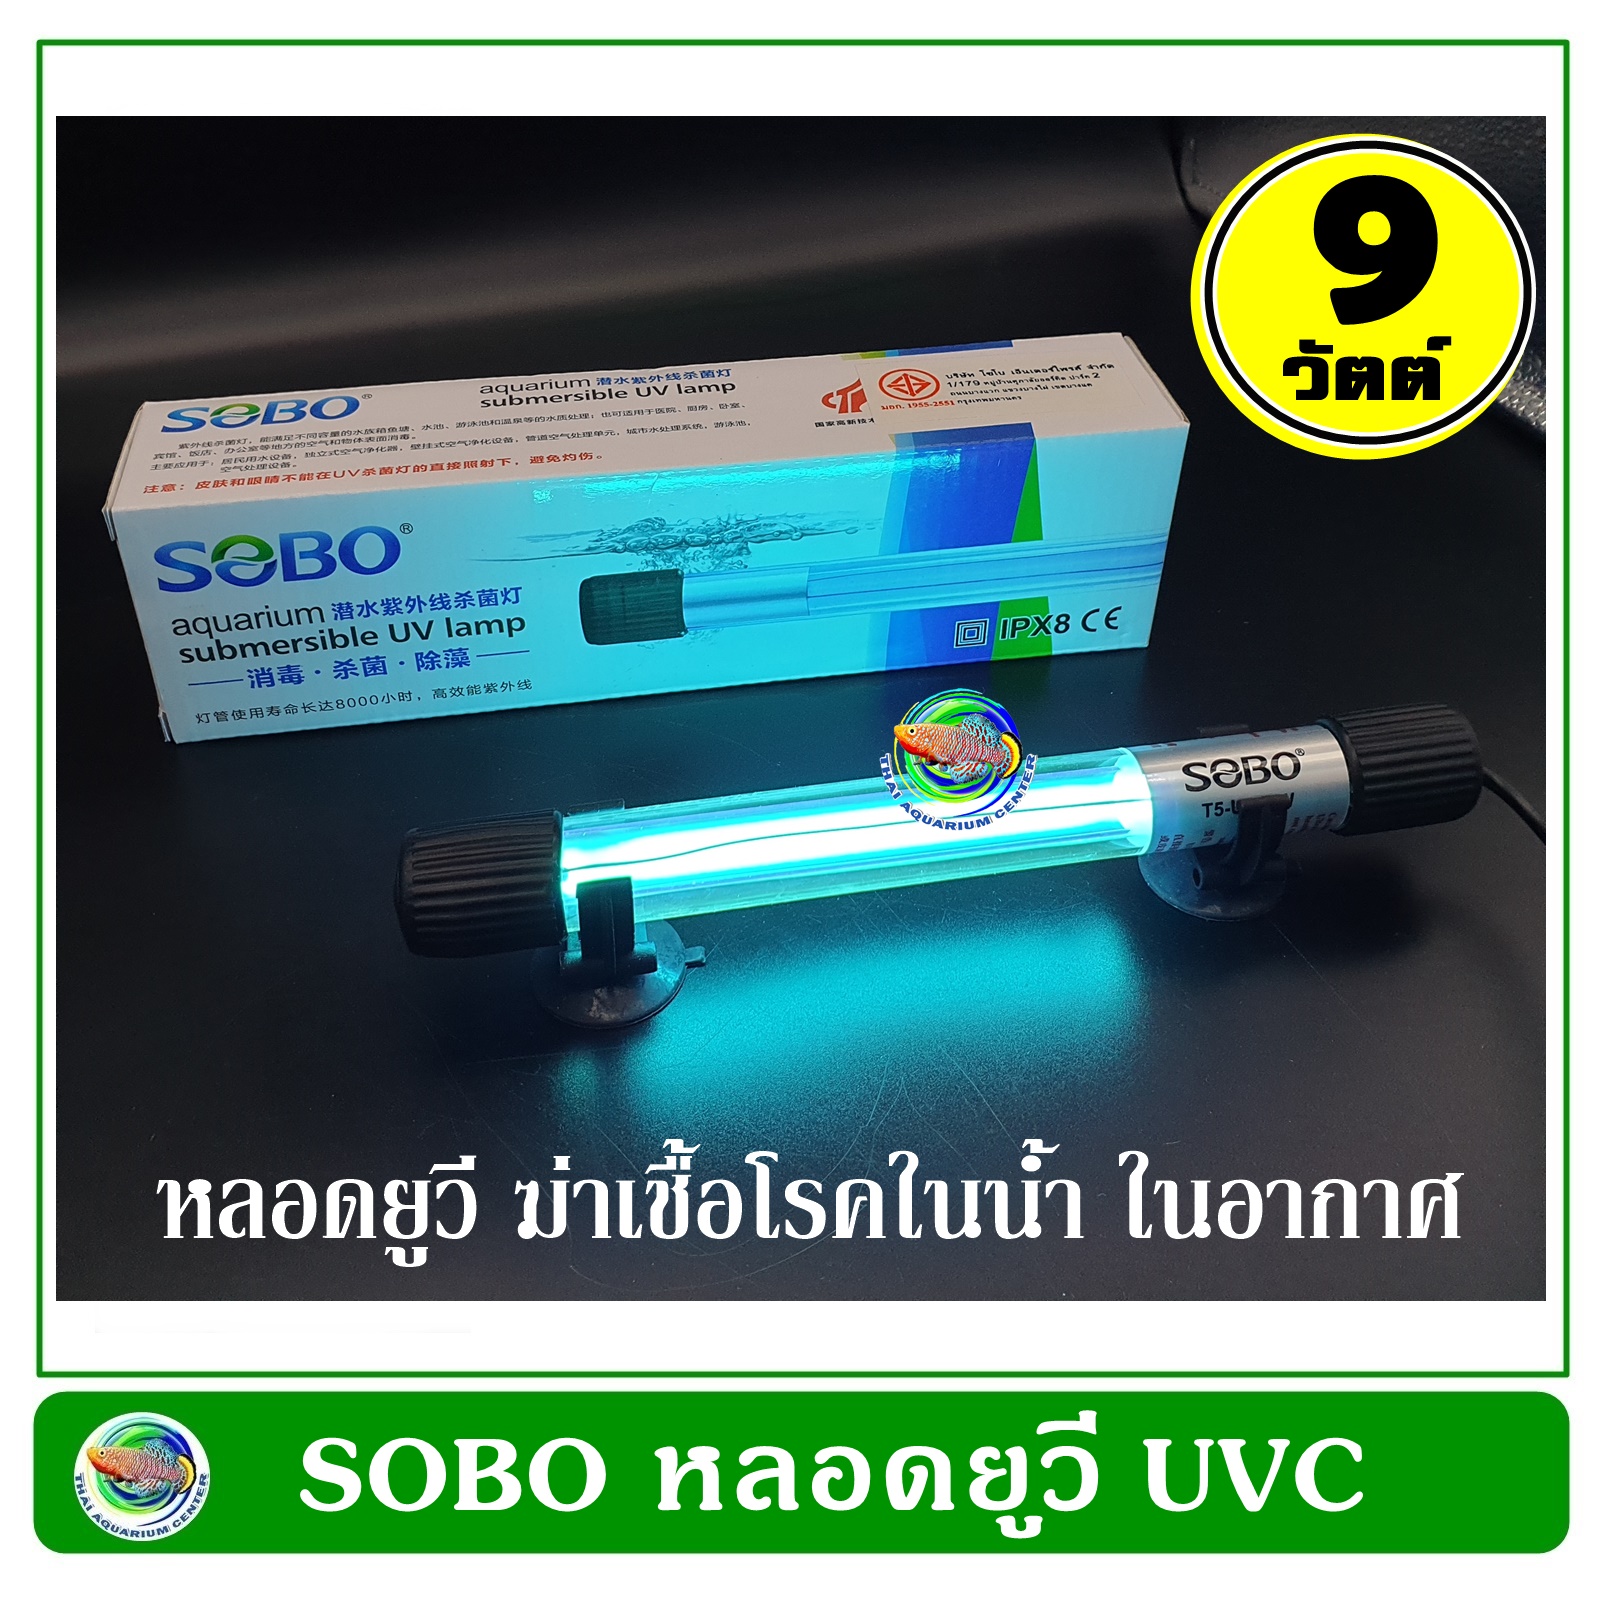 SOBO UV 9 W หลอดยูวี ฆ่าเชื้อโรค กำจัดตะไคร่เขียว ขนาด 9 วัตต์ UVC UV Sterilizer